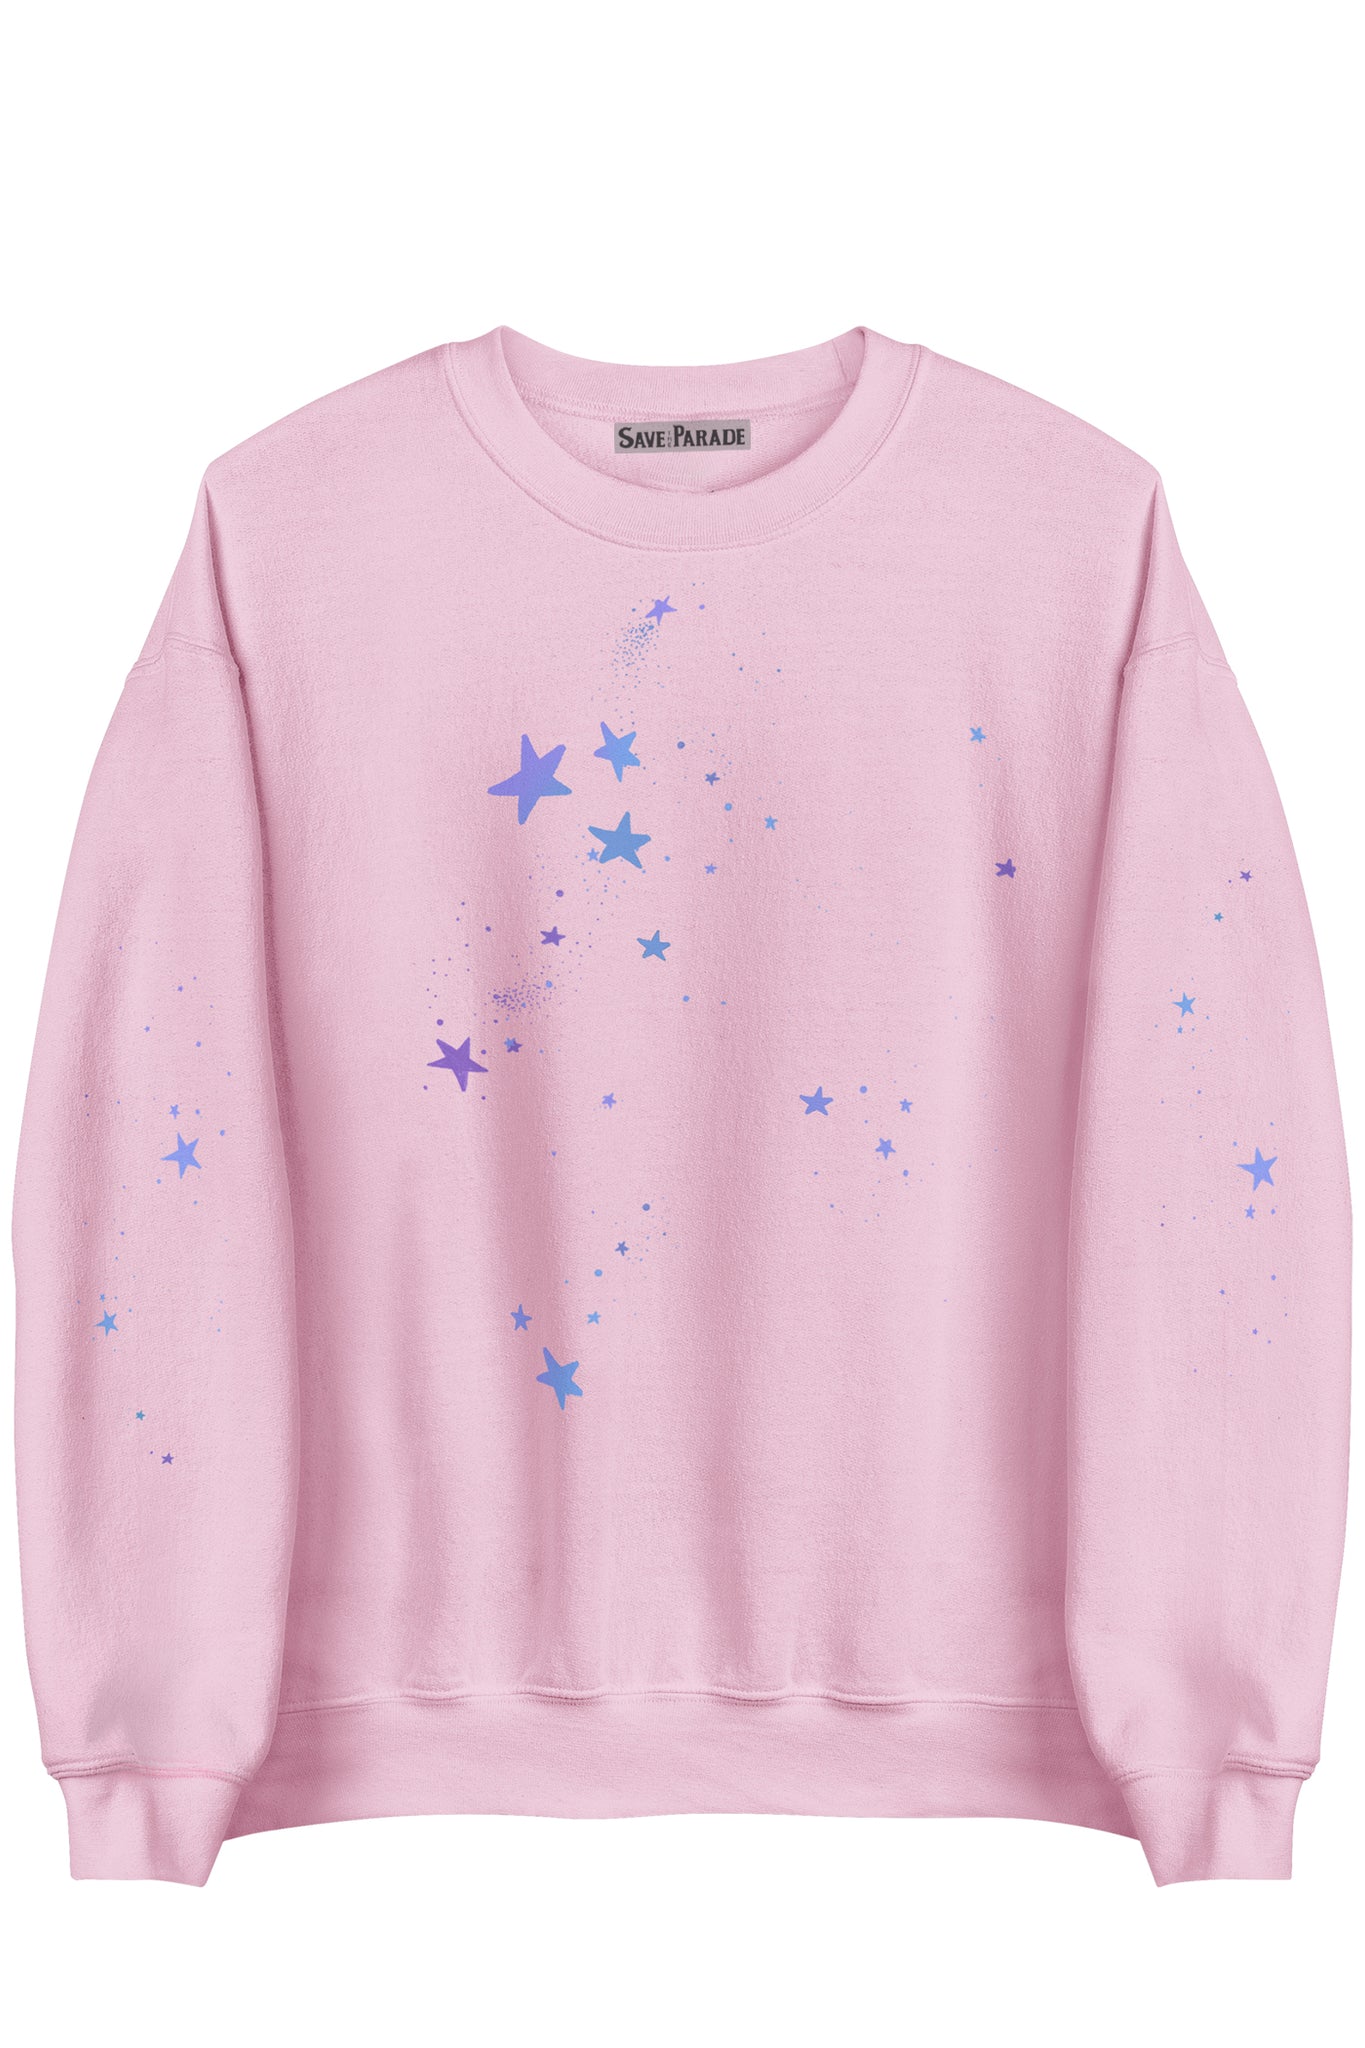 We Are Stardust Sweatshirt